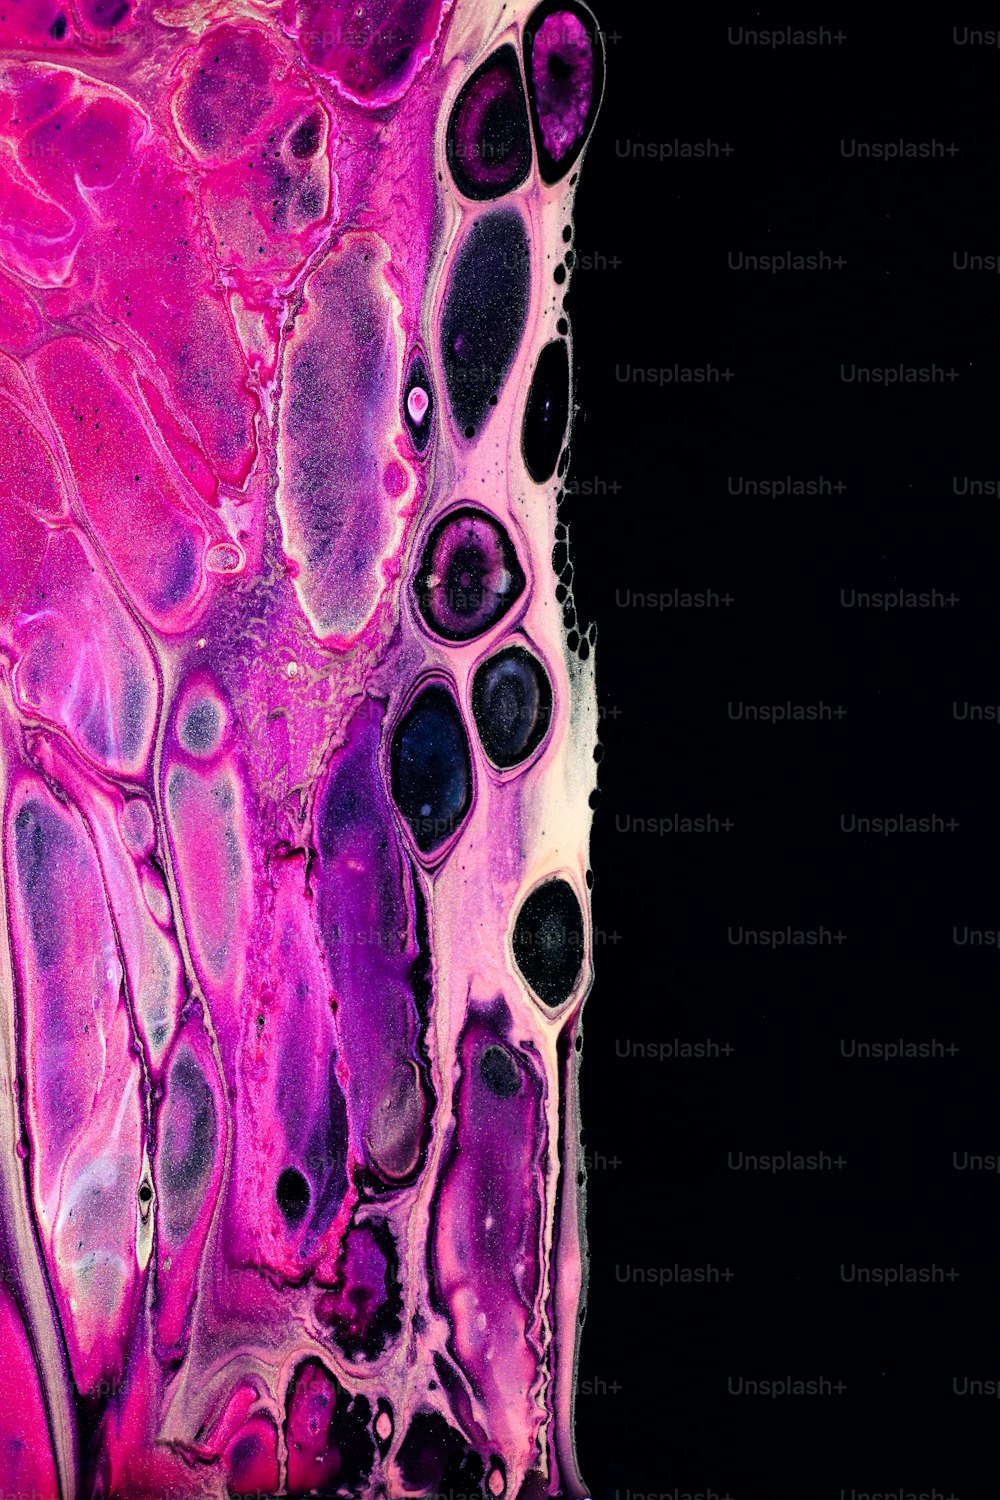 a close up of a purple and black liquid